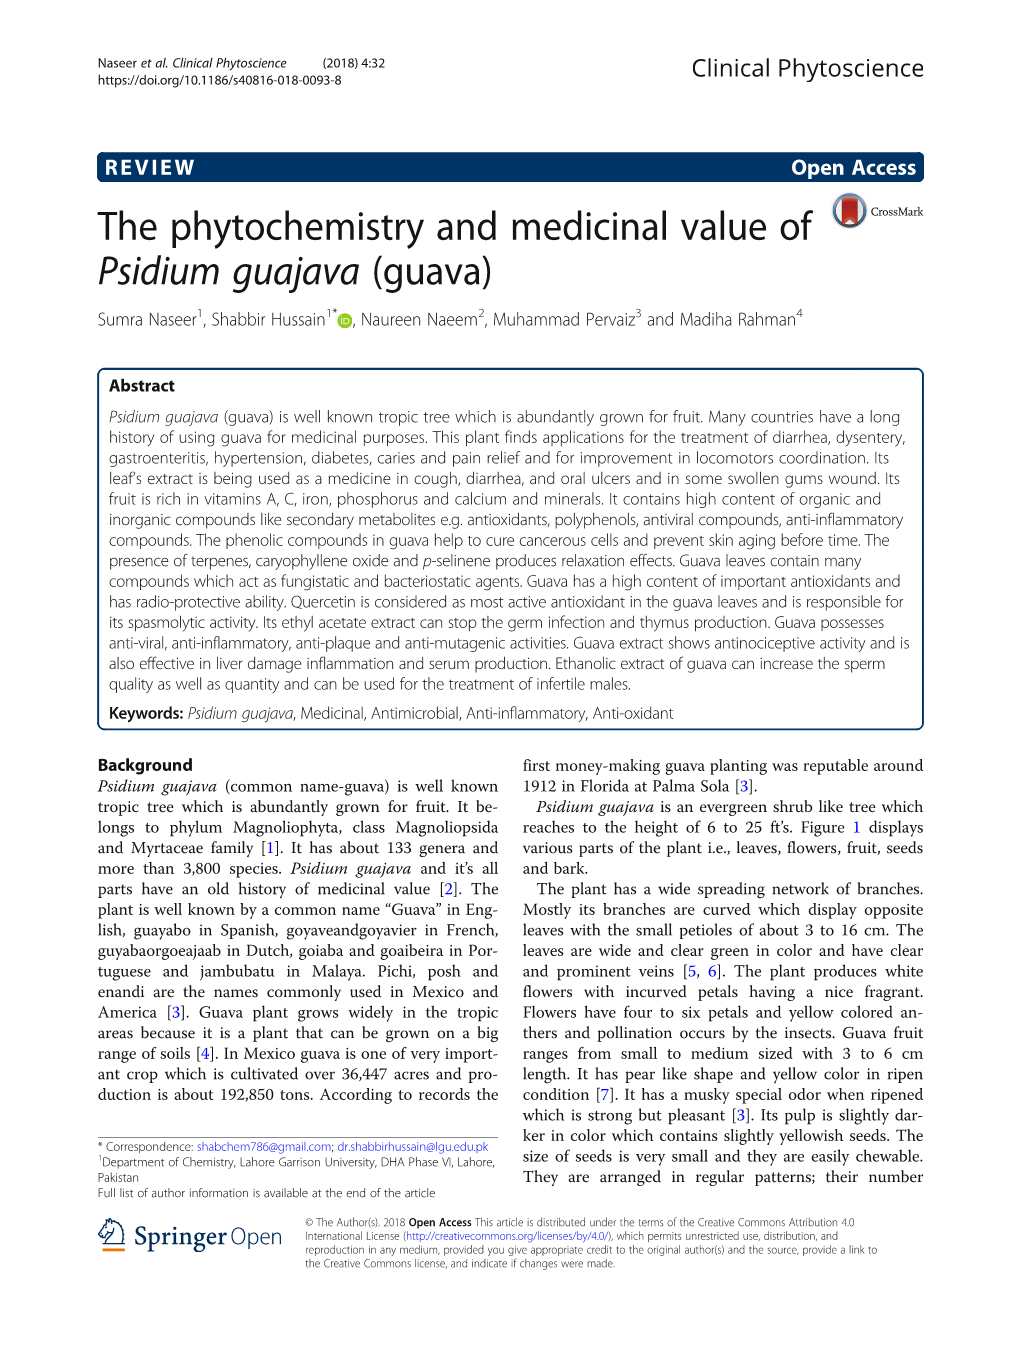 The Phytochemistry and Medicinal Value of Psidium Guajava (Guava) Sumra Naseer1, Shabbir Hussain1* , Naureen Naeem2, Muhammad Pervaiz3 and Madiha Rahman4